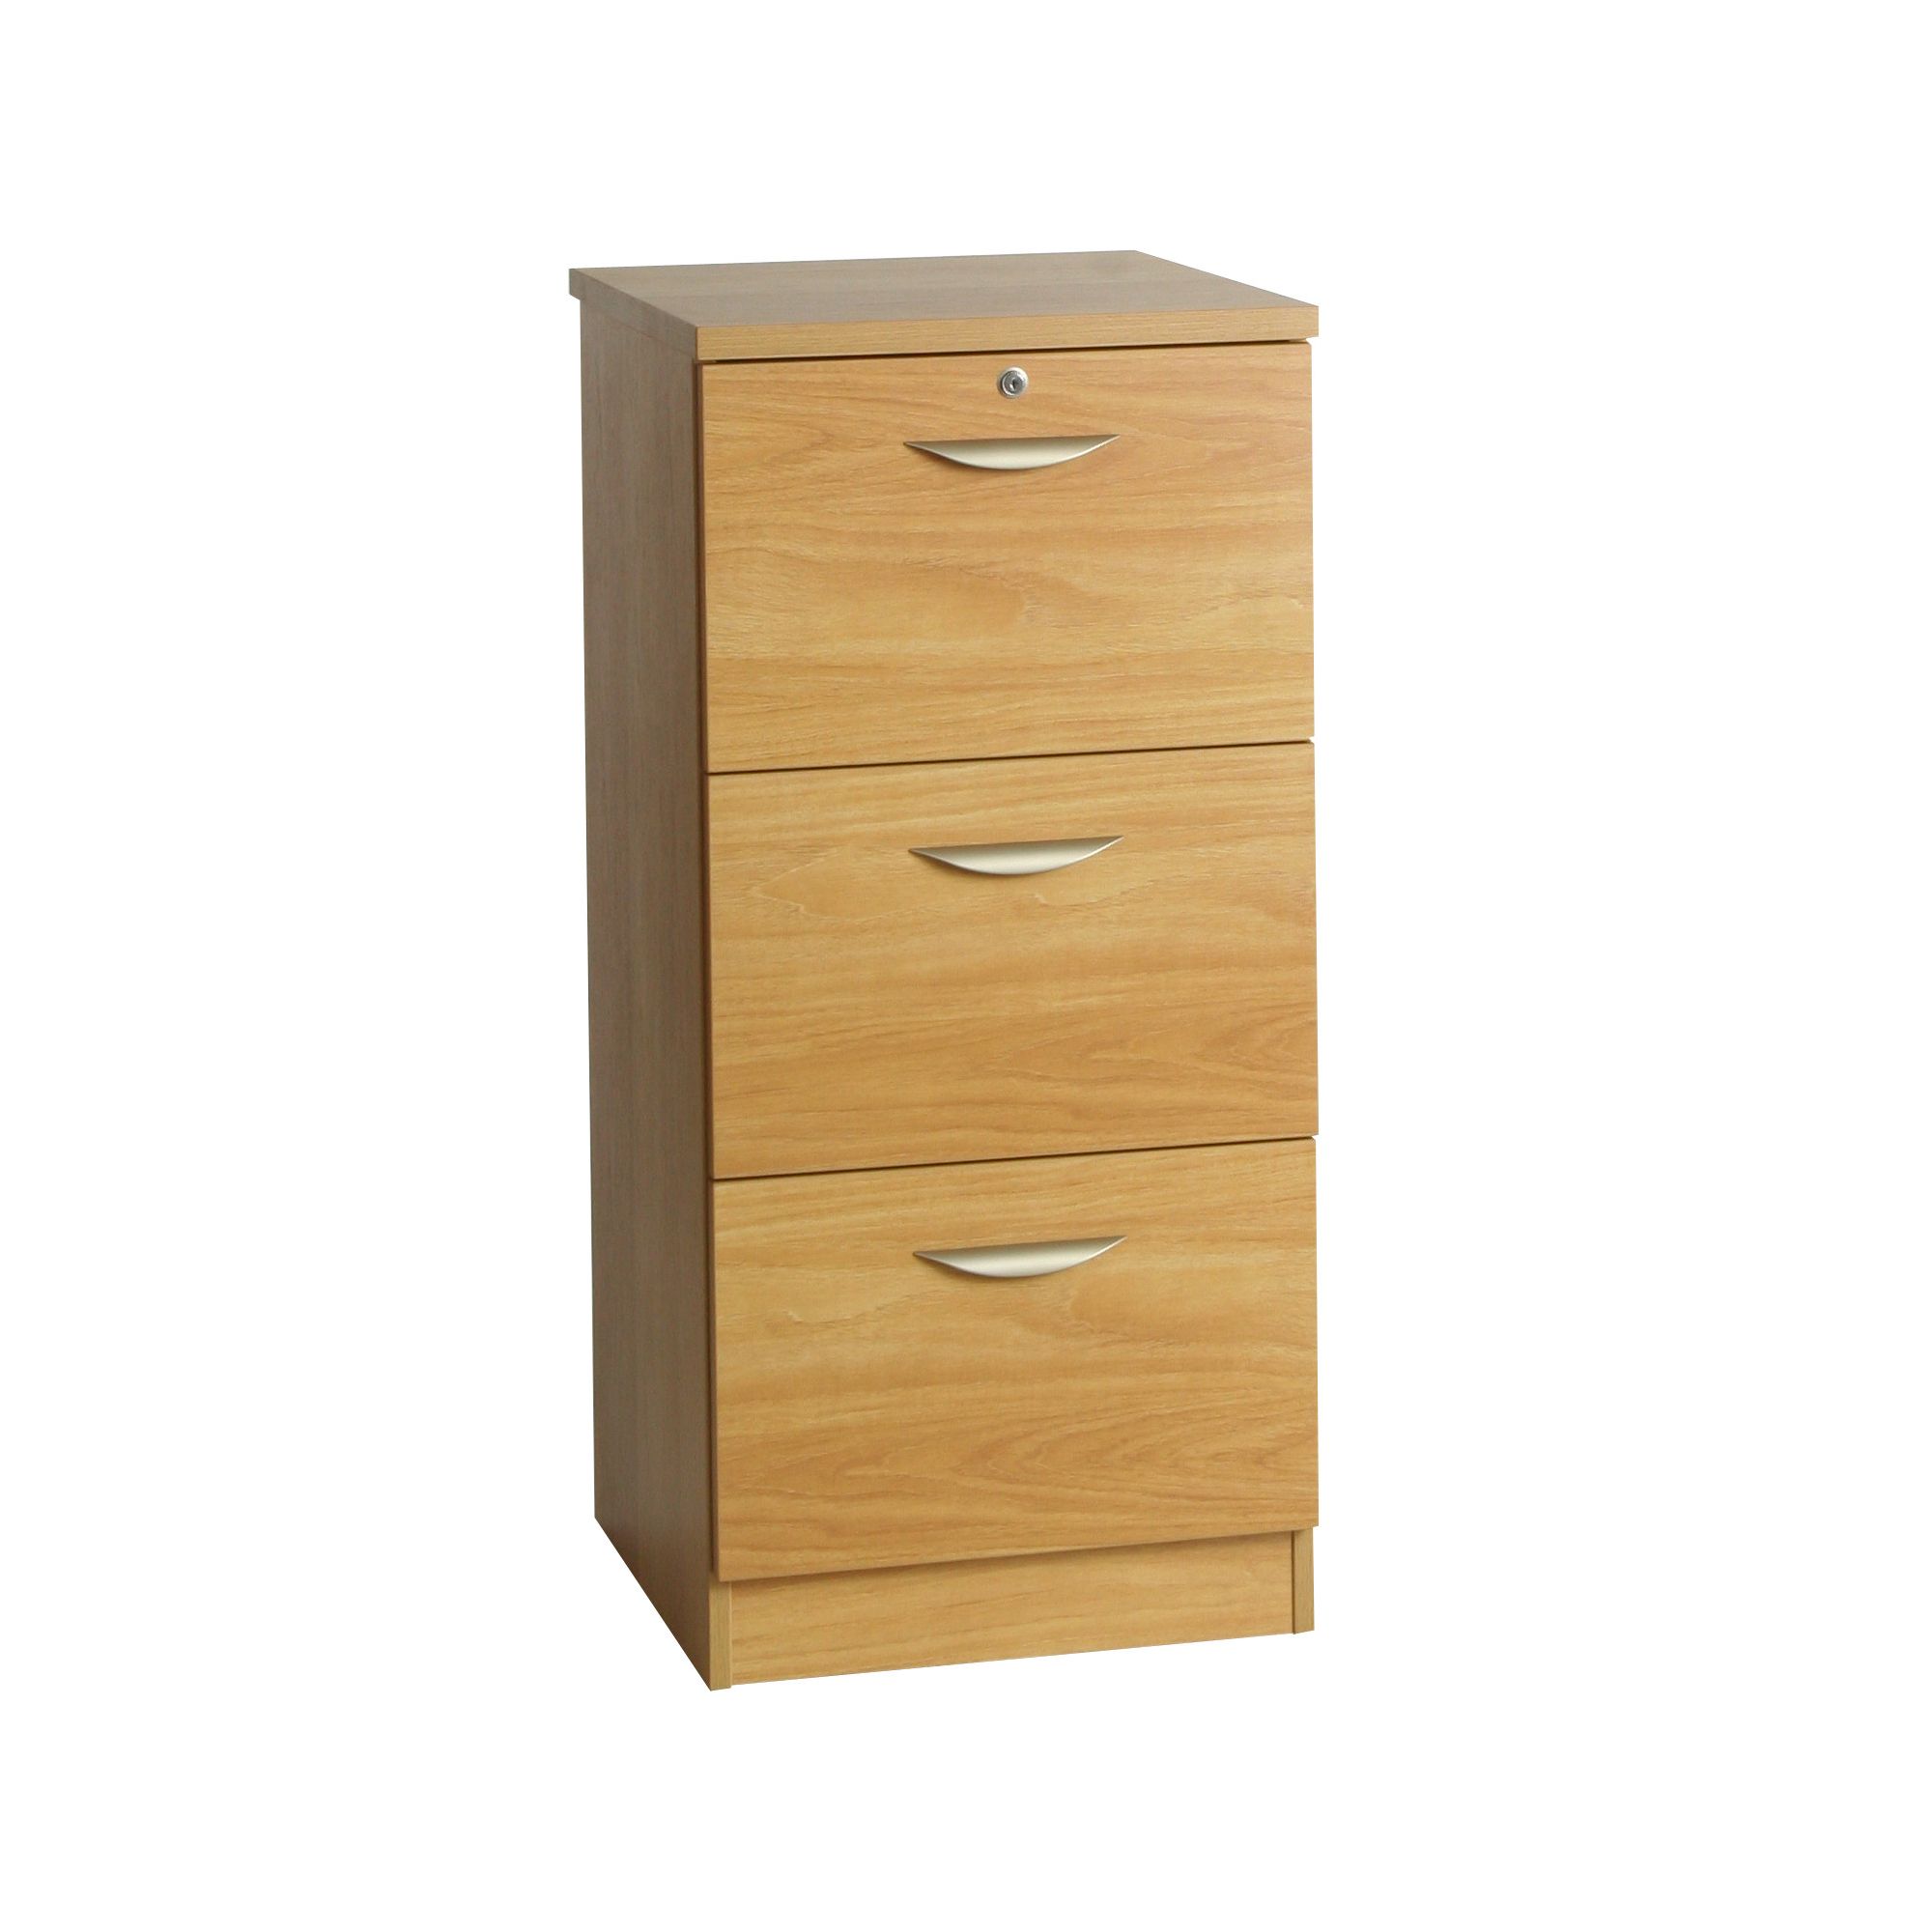 Enduro Three Drawer Tall Wooden Filing Cabinet - Walnut at Tesco Direct